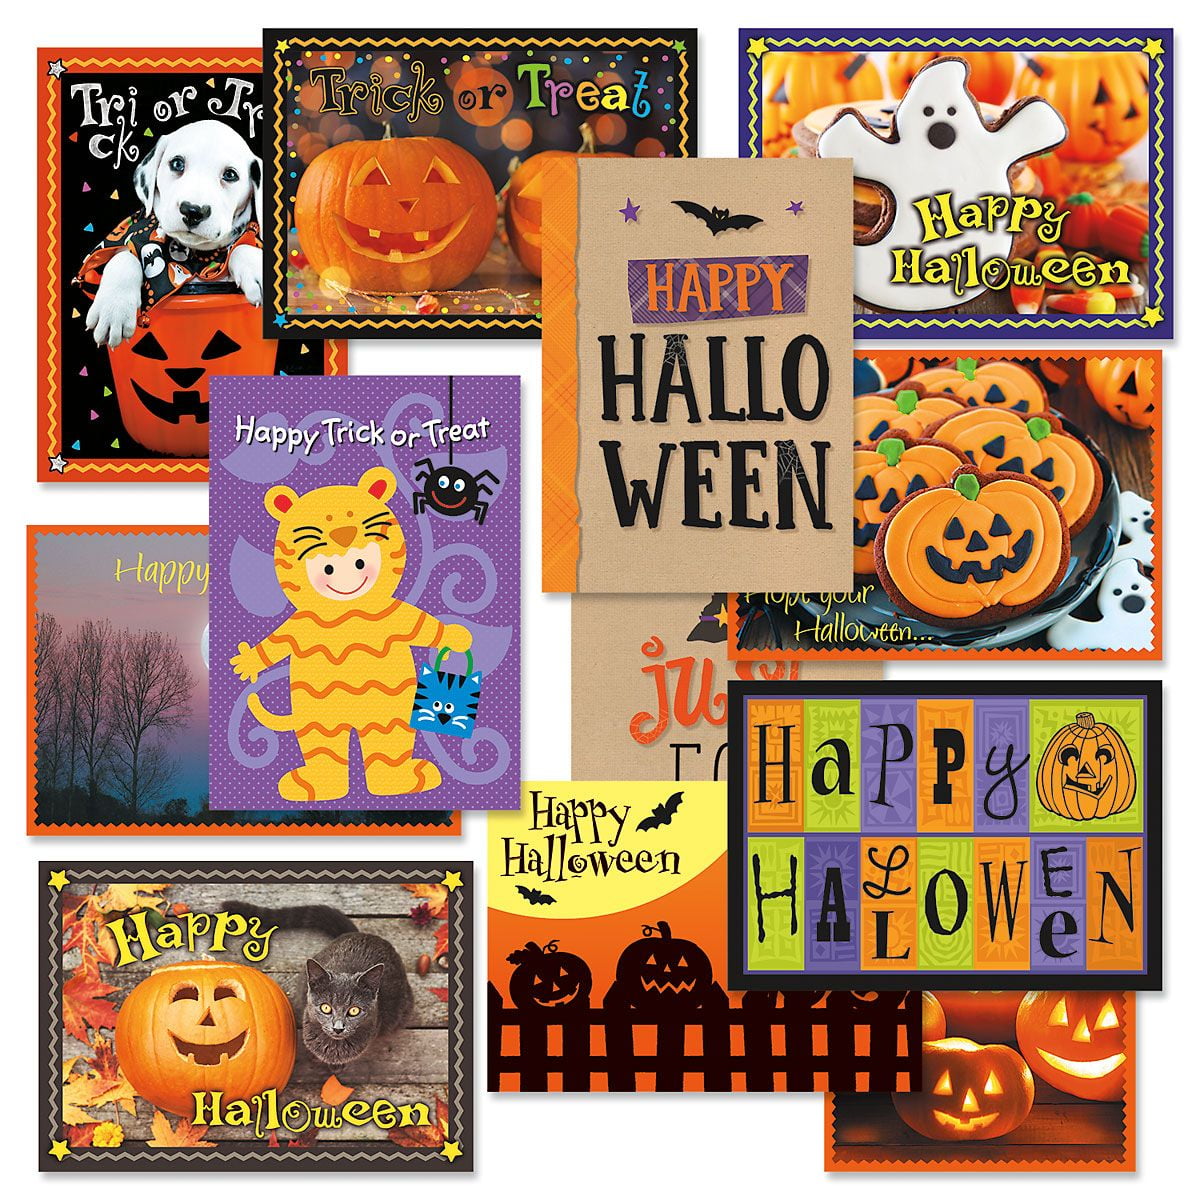 Festive Animals 8 Cards with Envelopes Hallmark Halloween Cards Assortment